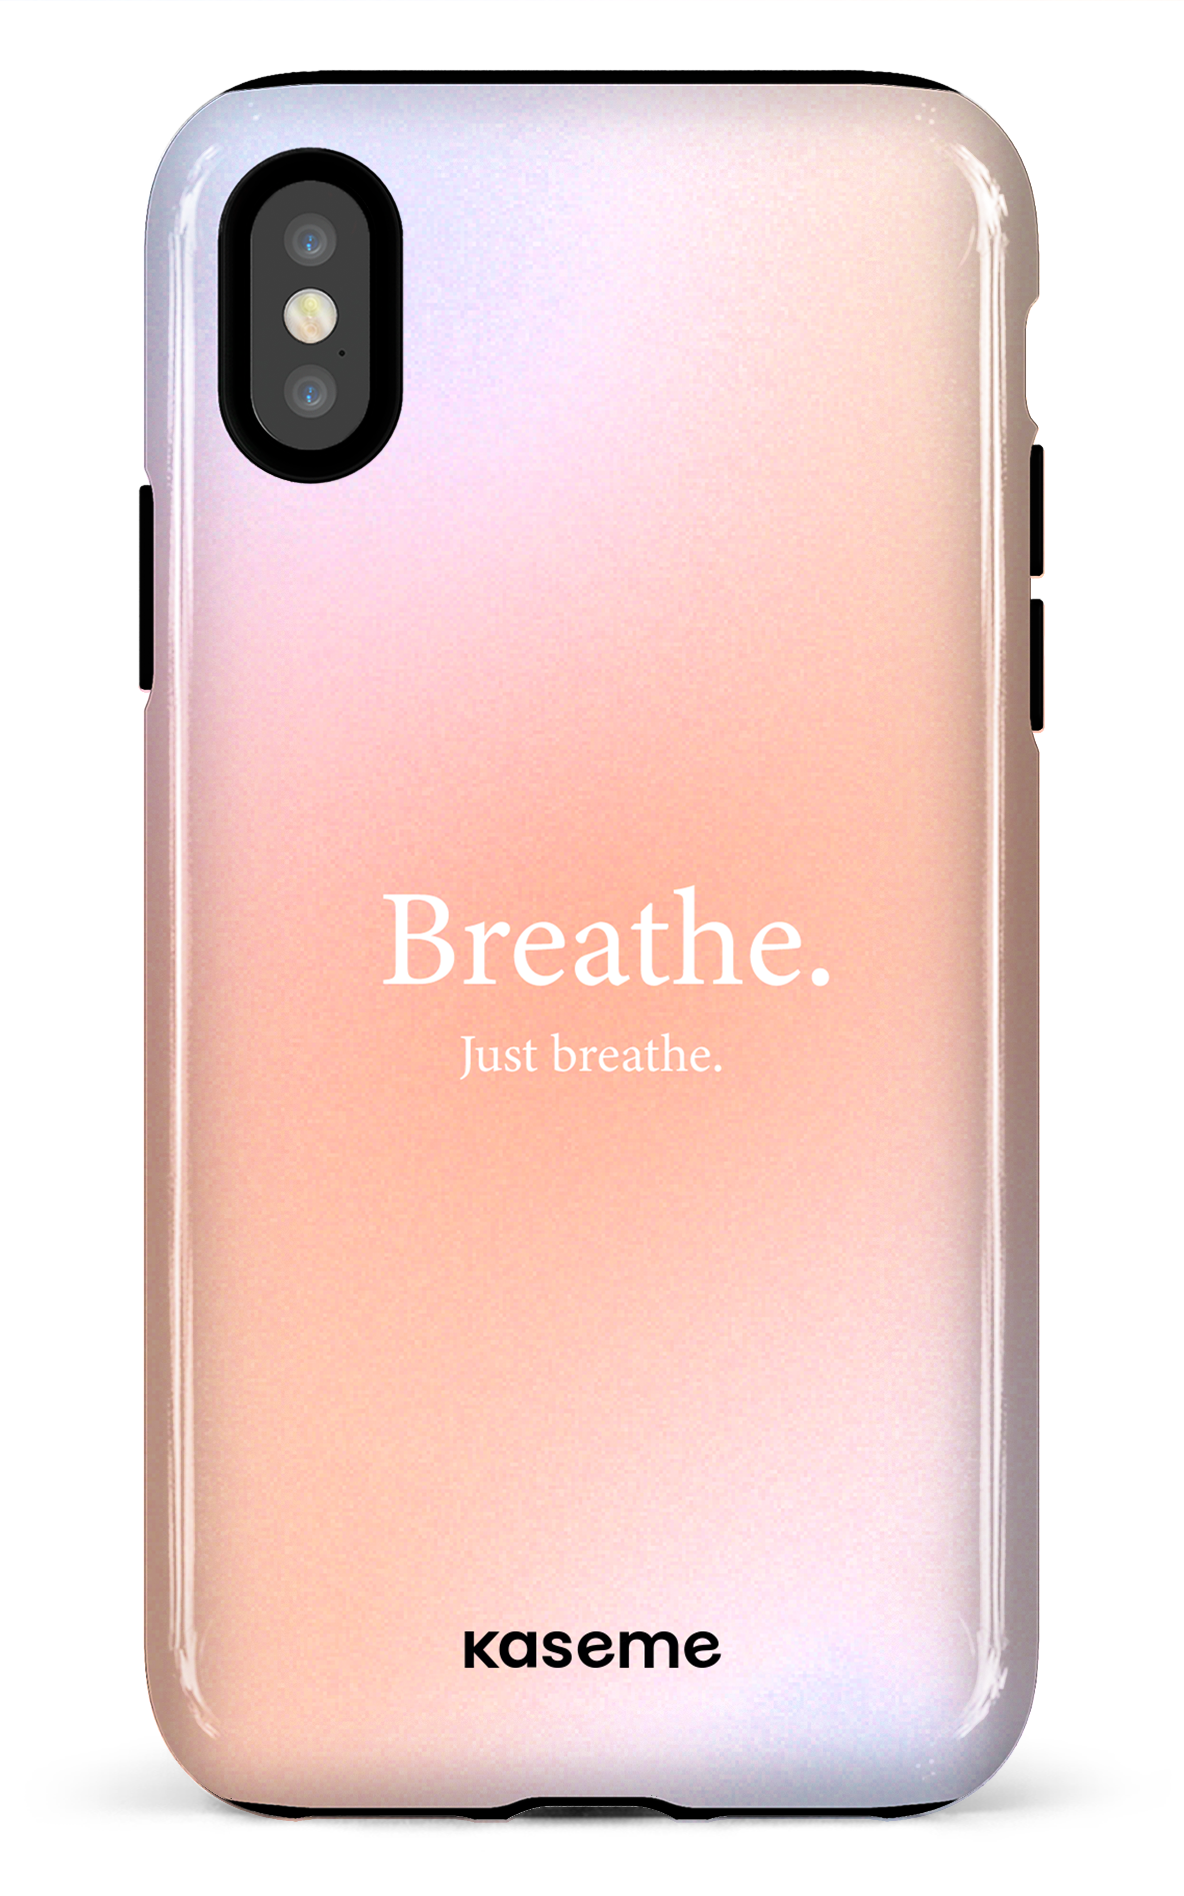 Just breathe - iPhone X/Xs